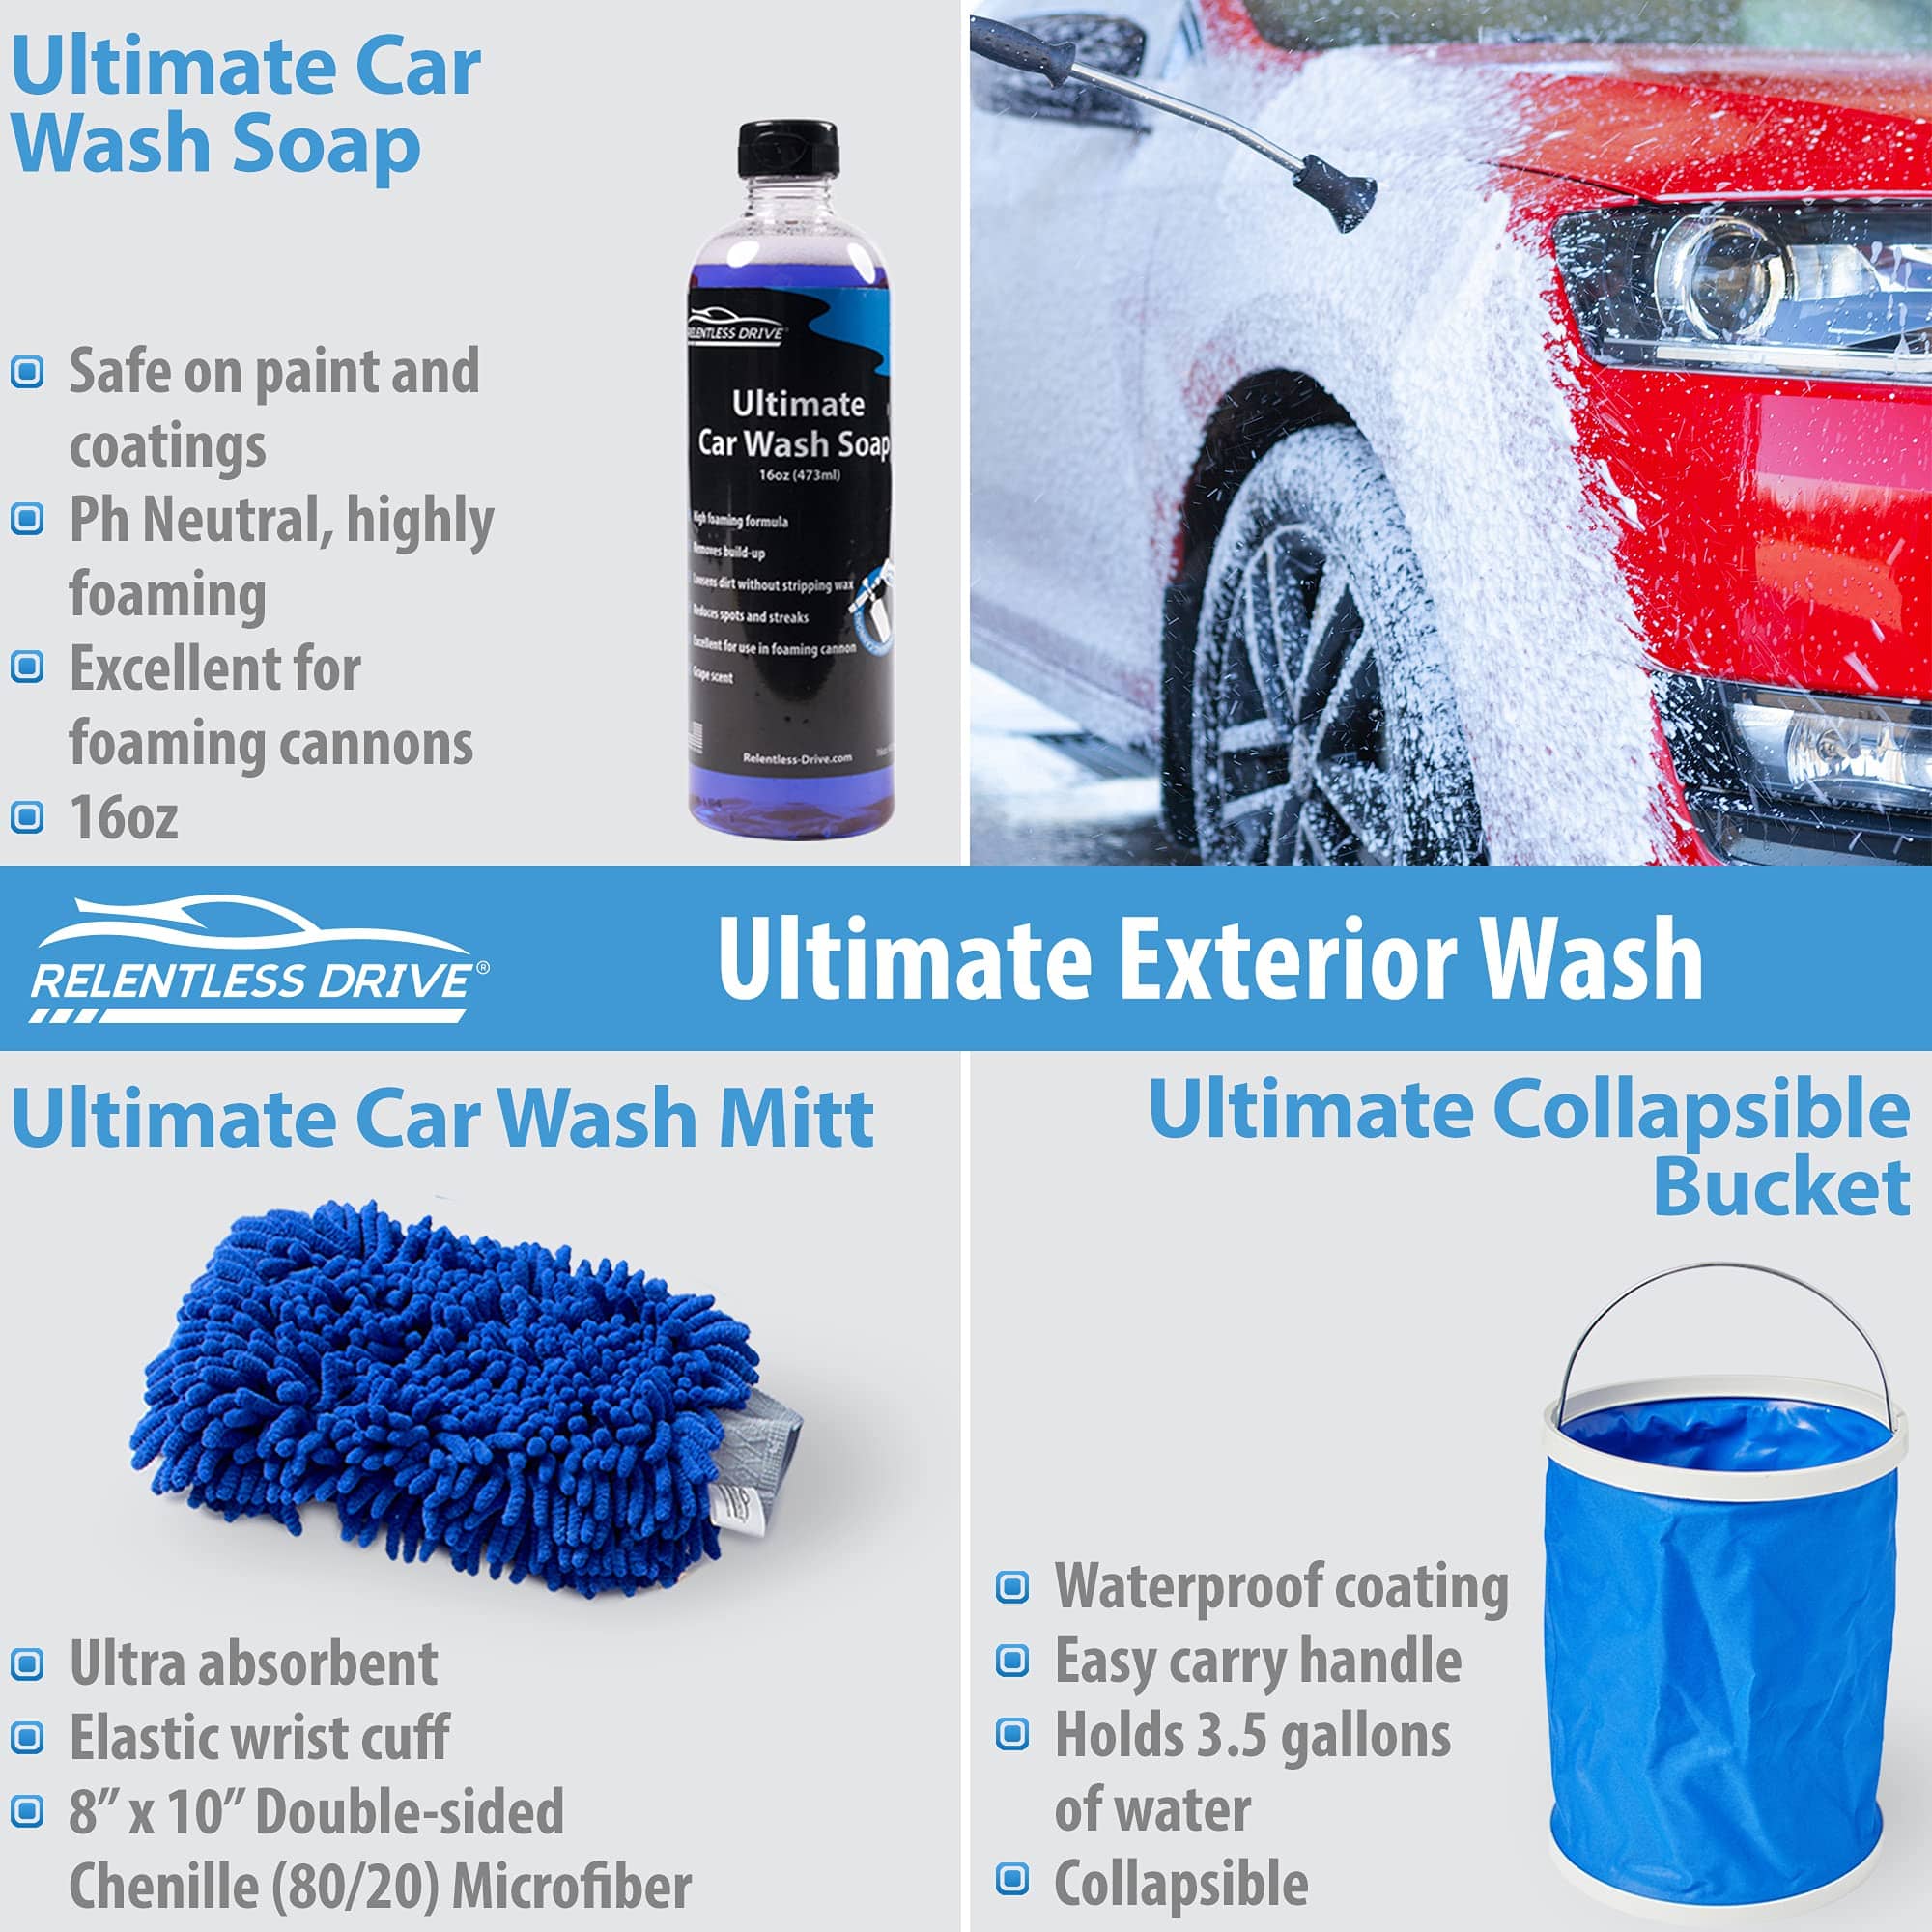 Relentless Drive Car Upholstery Cleaner Kit - Car Seat Cleaner & Car Carpet  Cleaner - Works Great on Stains, Keep Car Interior Smelling Fresh - Car